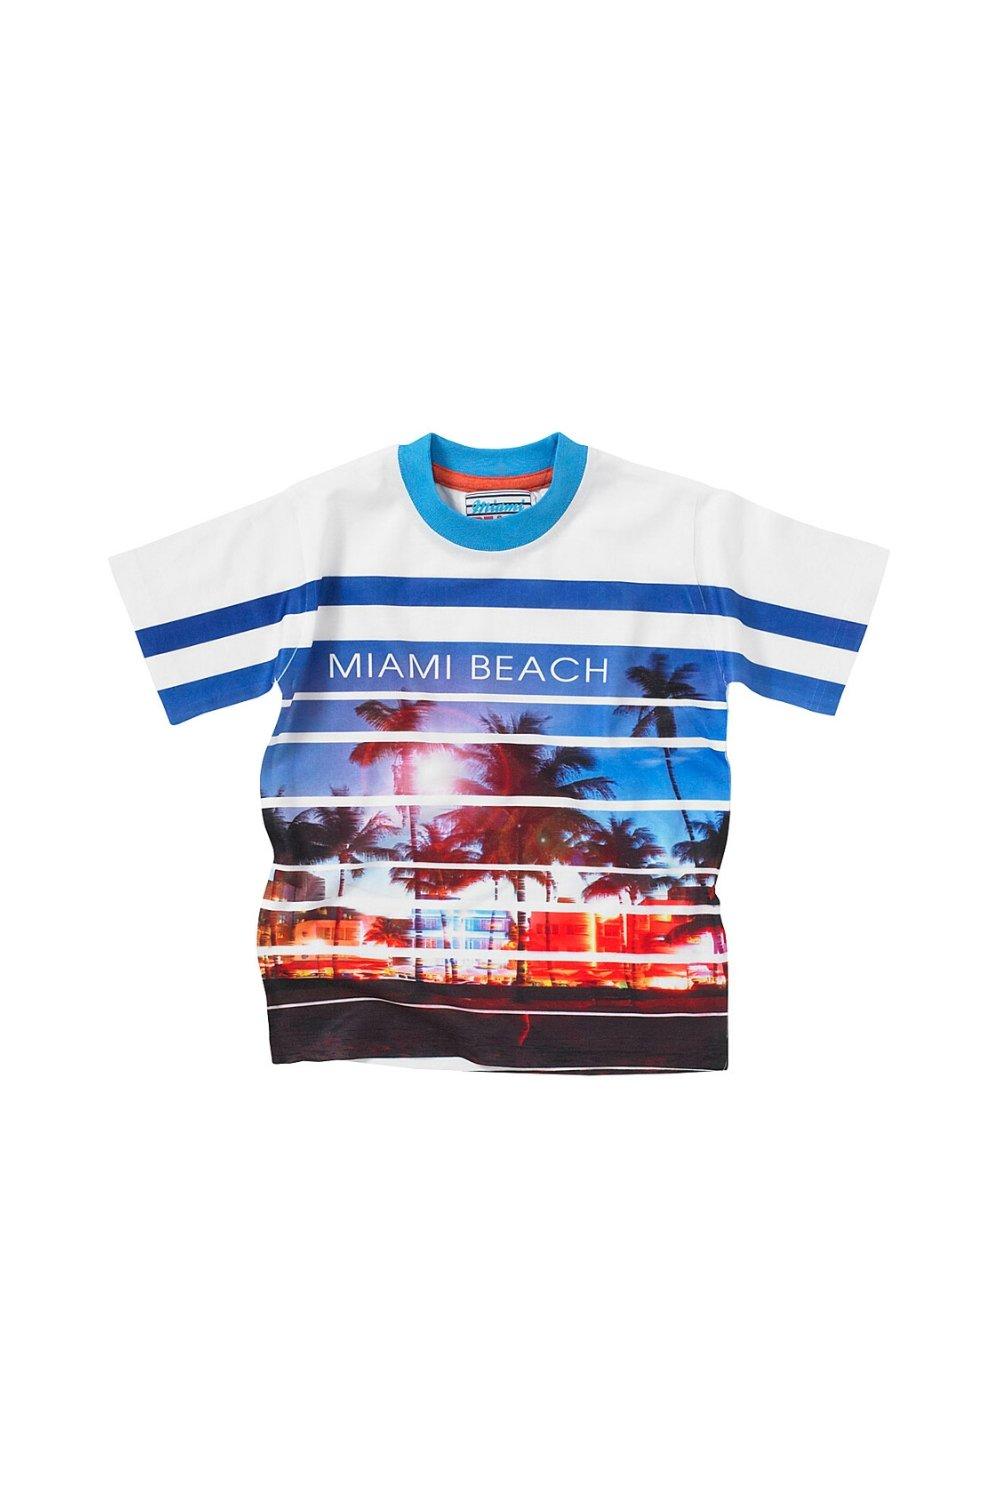 Miami Beach Short Sleeve T-shirt